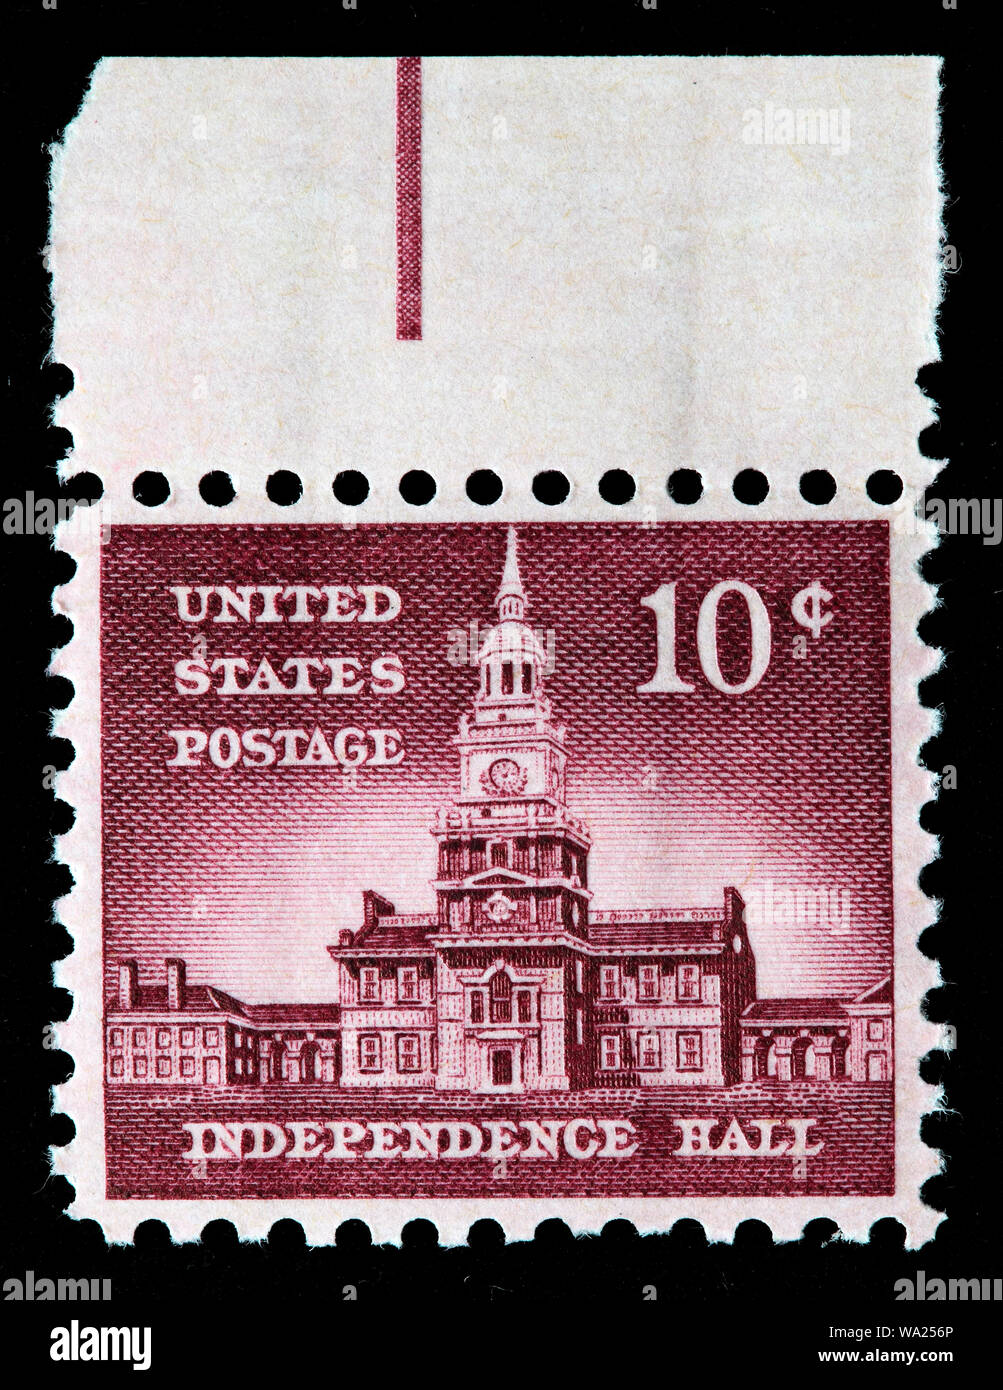 L'Independence Hall, 1753, Philadelphie, Pennsylvanie, timbre-poste, USA, 1956 Banque D'Images